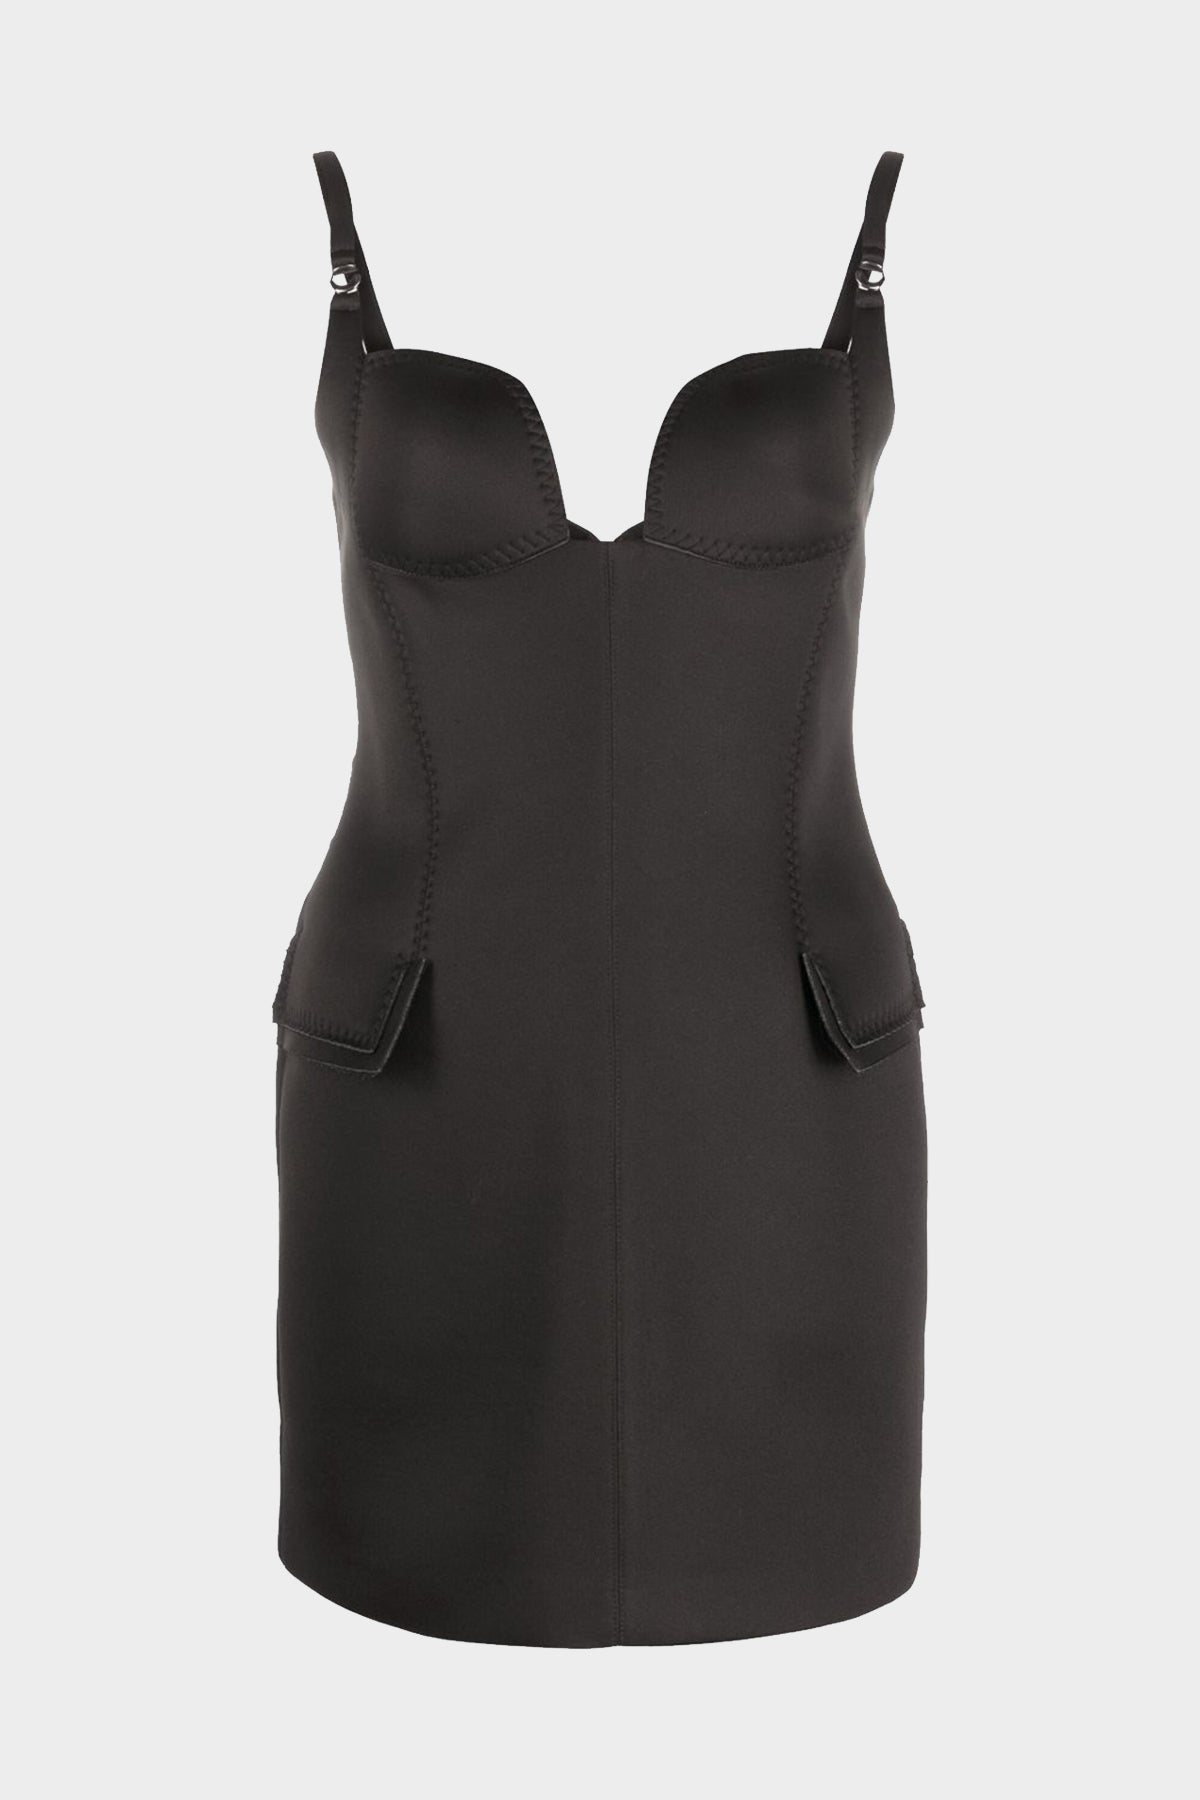 Cup Strap Dress in Black - shop-olivia.com